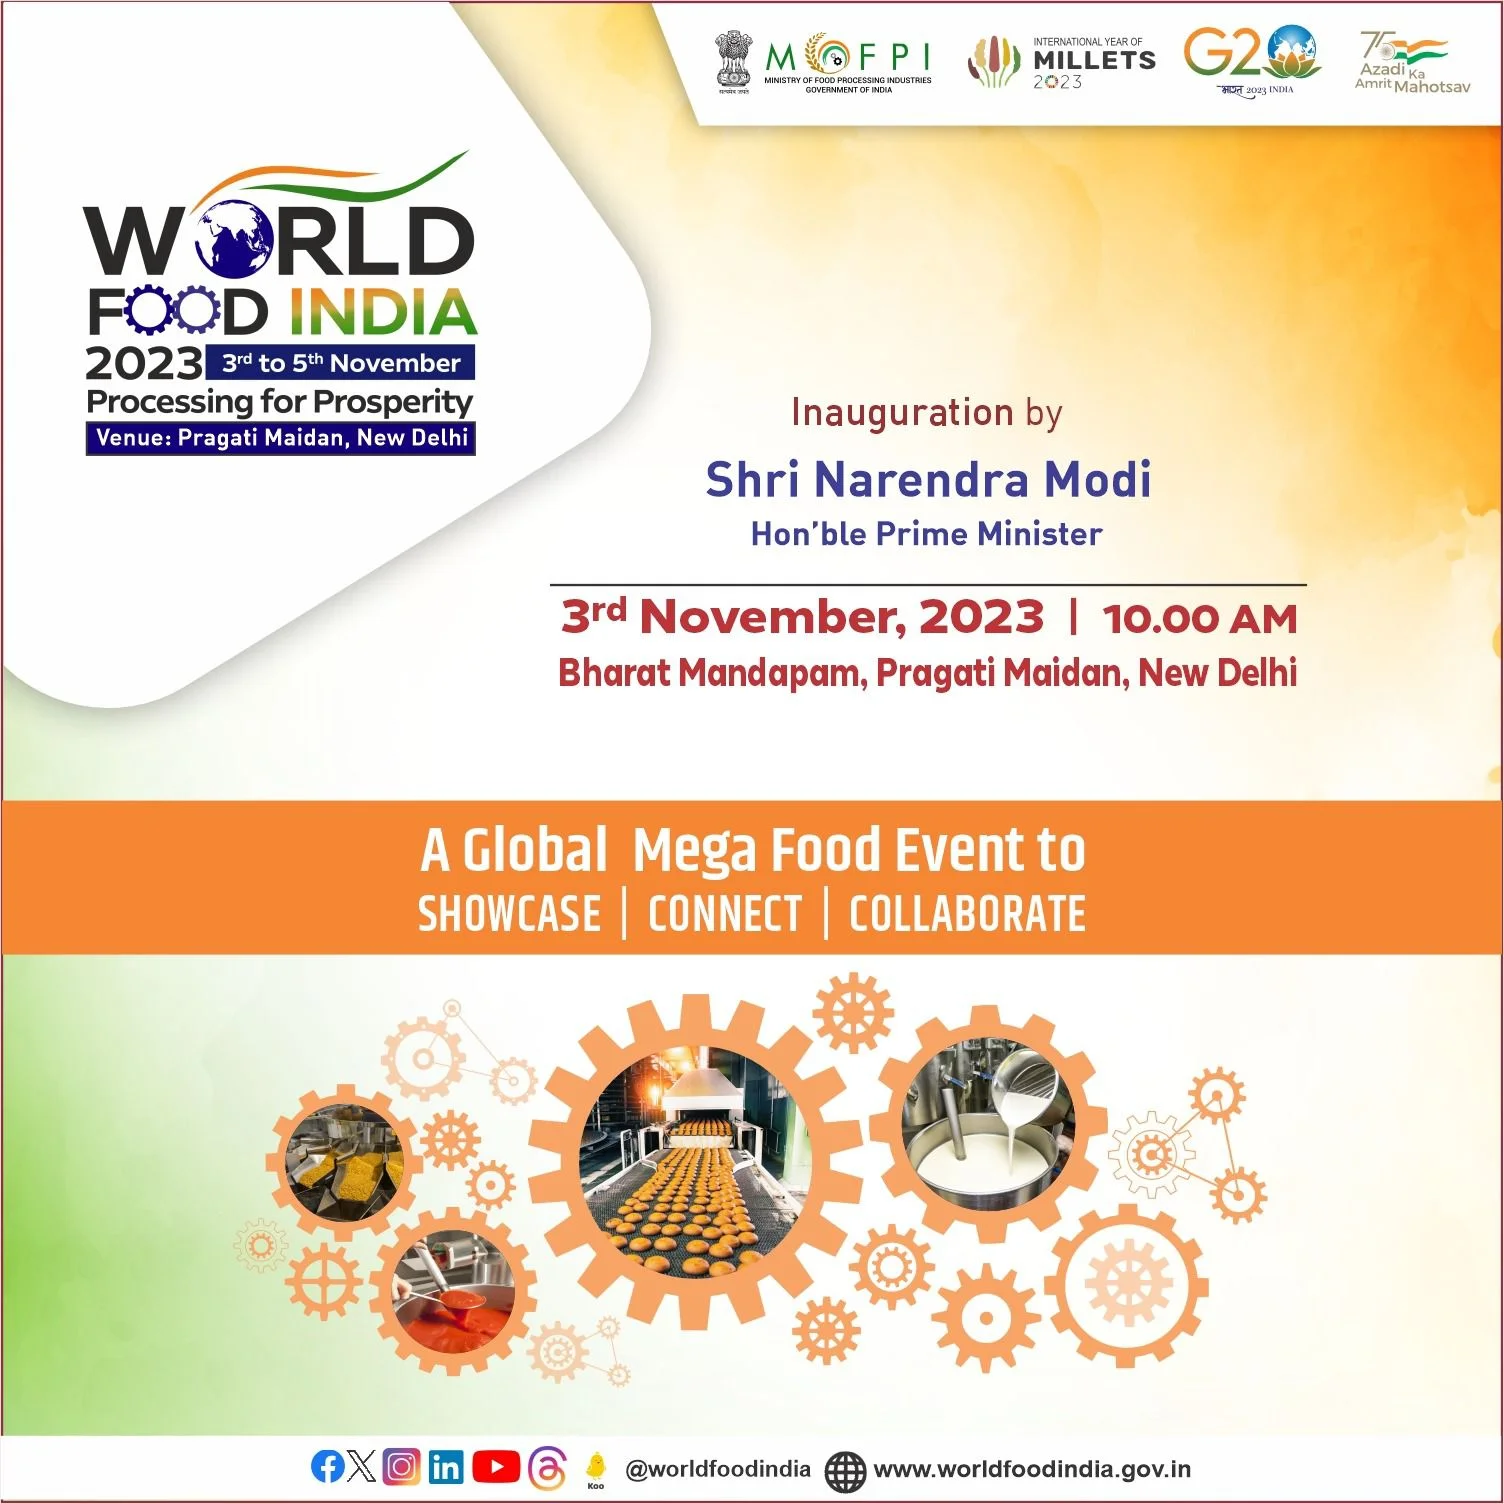 World Food India 2023 Inaugurated by Prime Minister Shri Narendra Modi ji on 3rd November, 2023 at Bharat Mandapam, Pragati Maidan, New Delhi.